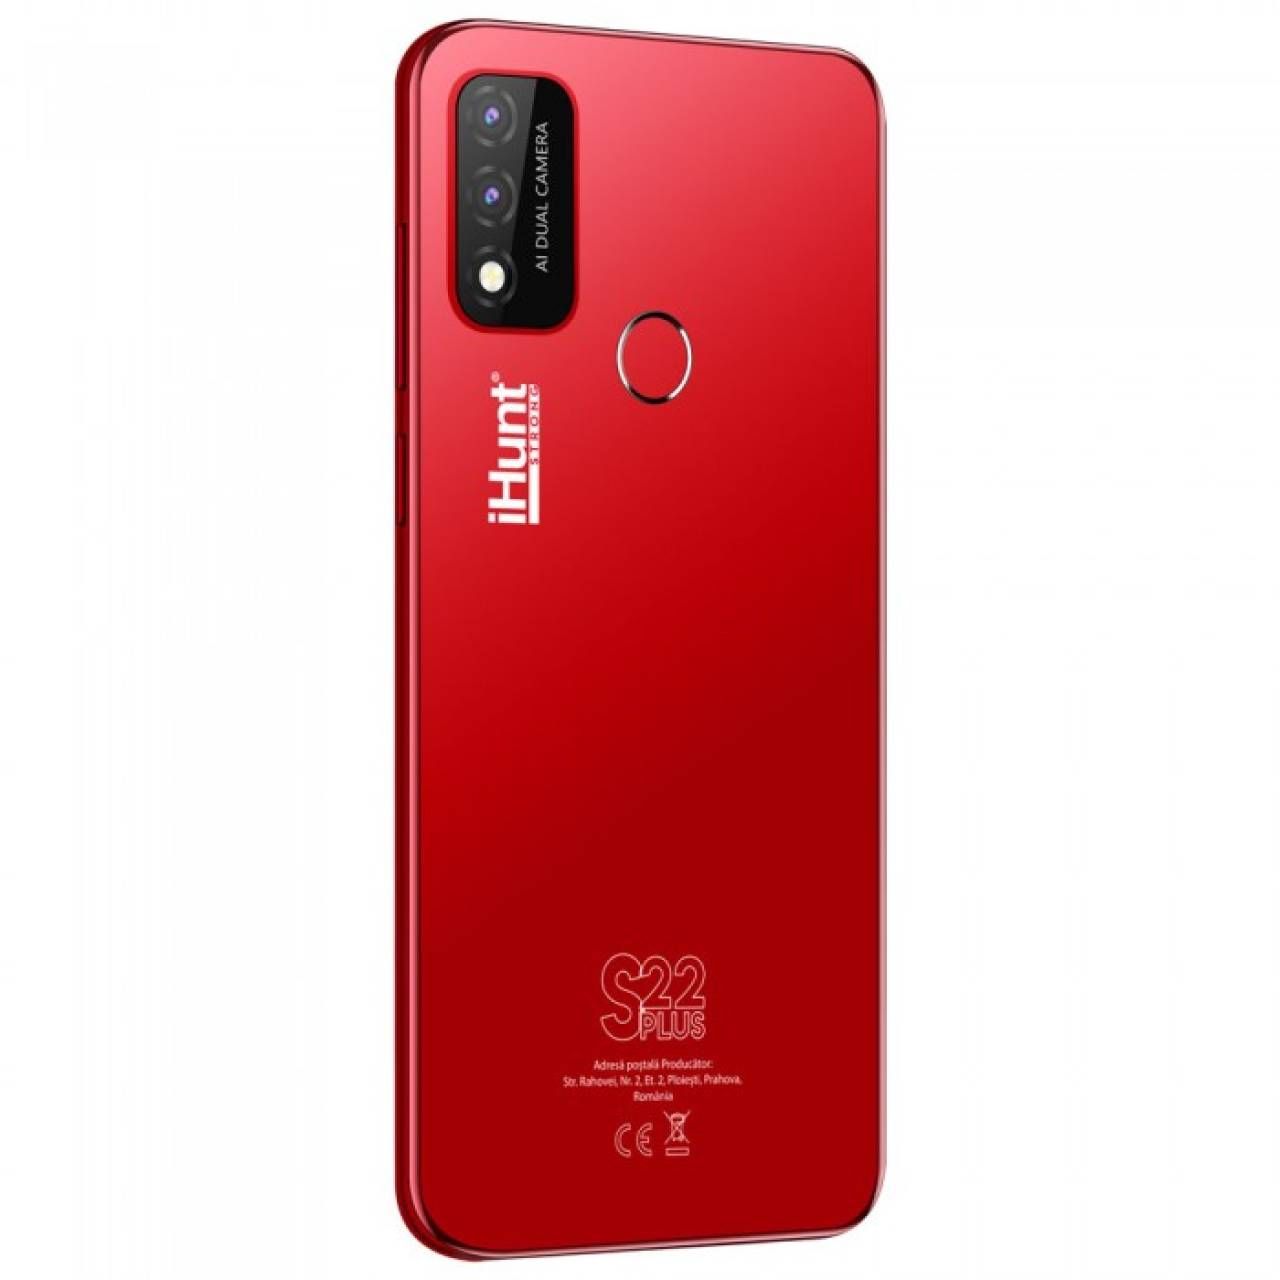 Telefon Mobil iHunt S22 Plus RED, 4G, 16GB, 2GB RAM, Display 6.1